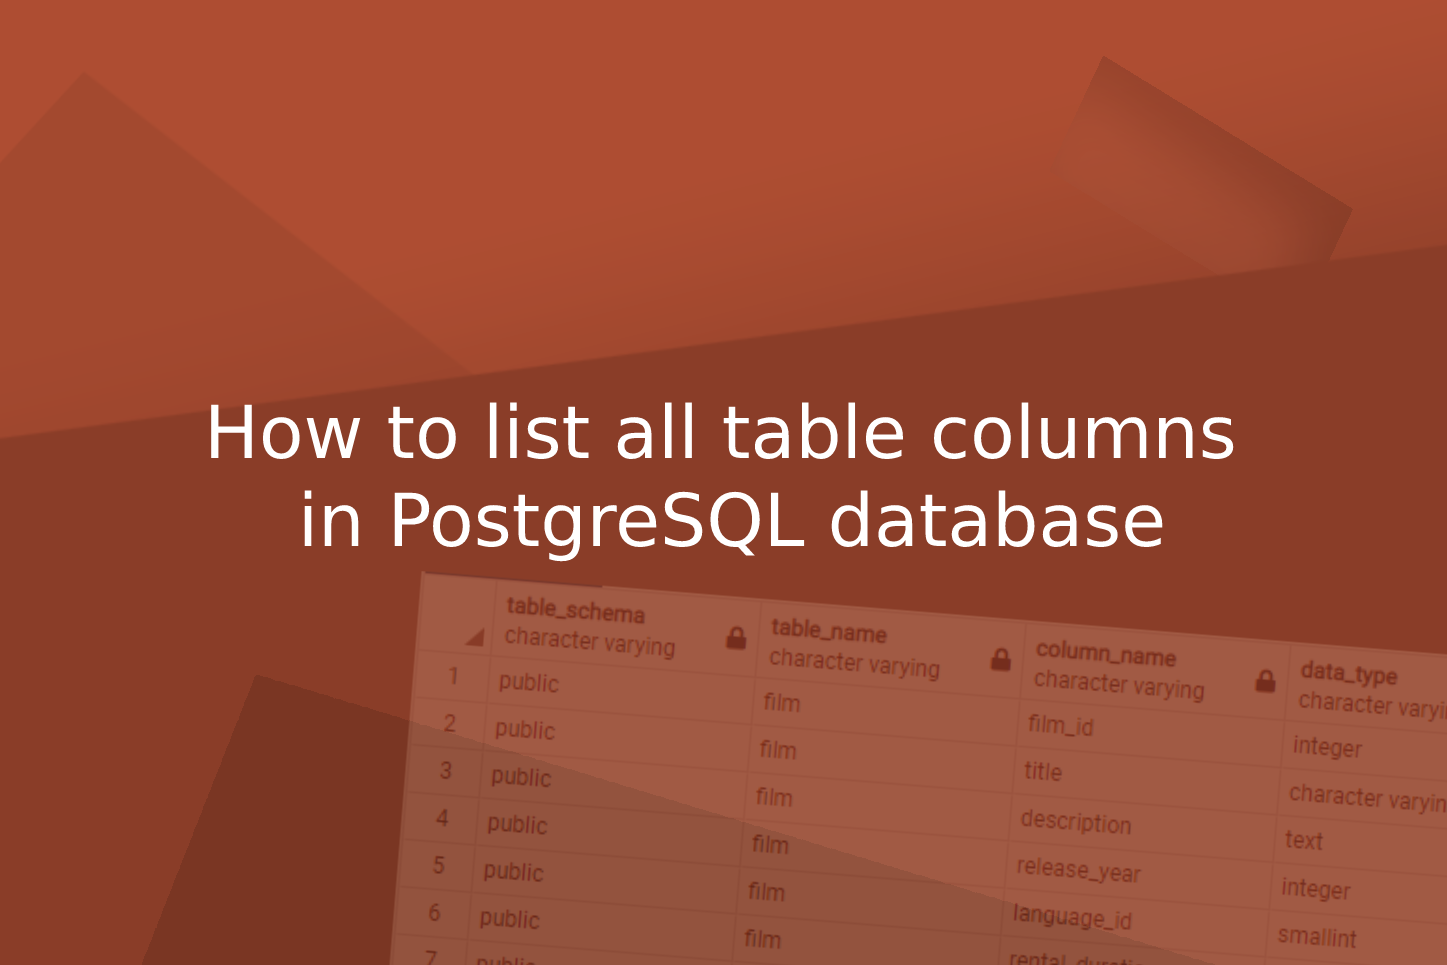 Pirate Illustrate Cemetery How to list all table columns in PostgreSQL database - Softbuilder Blog